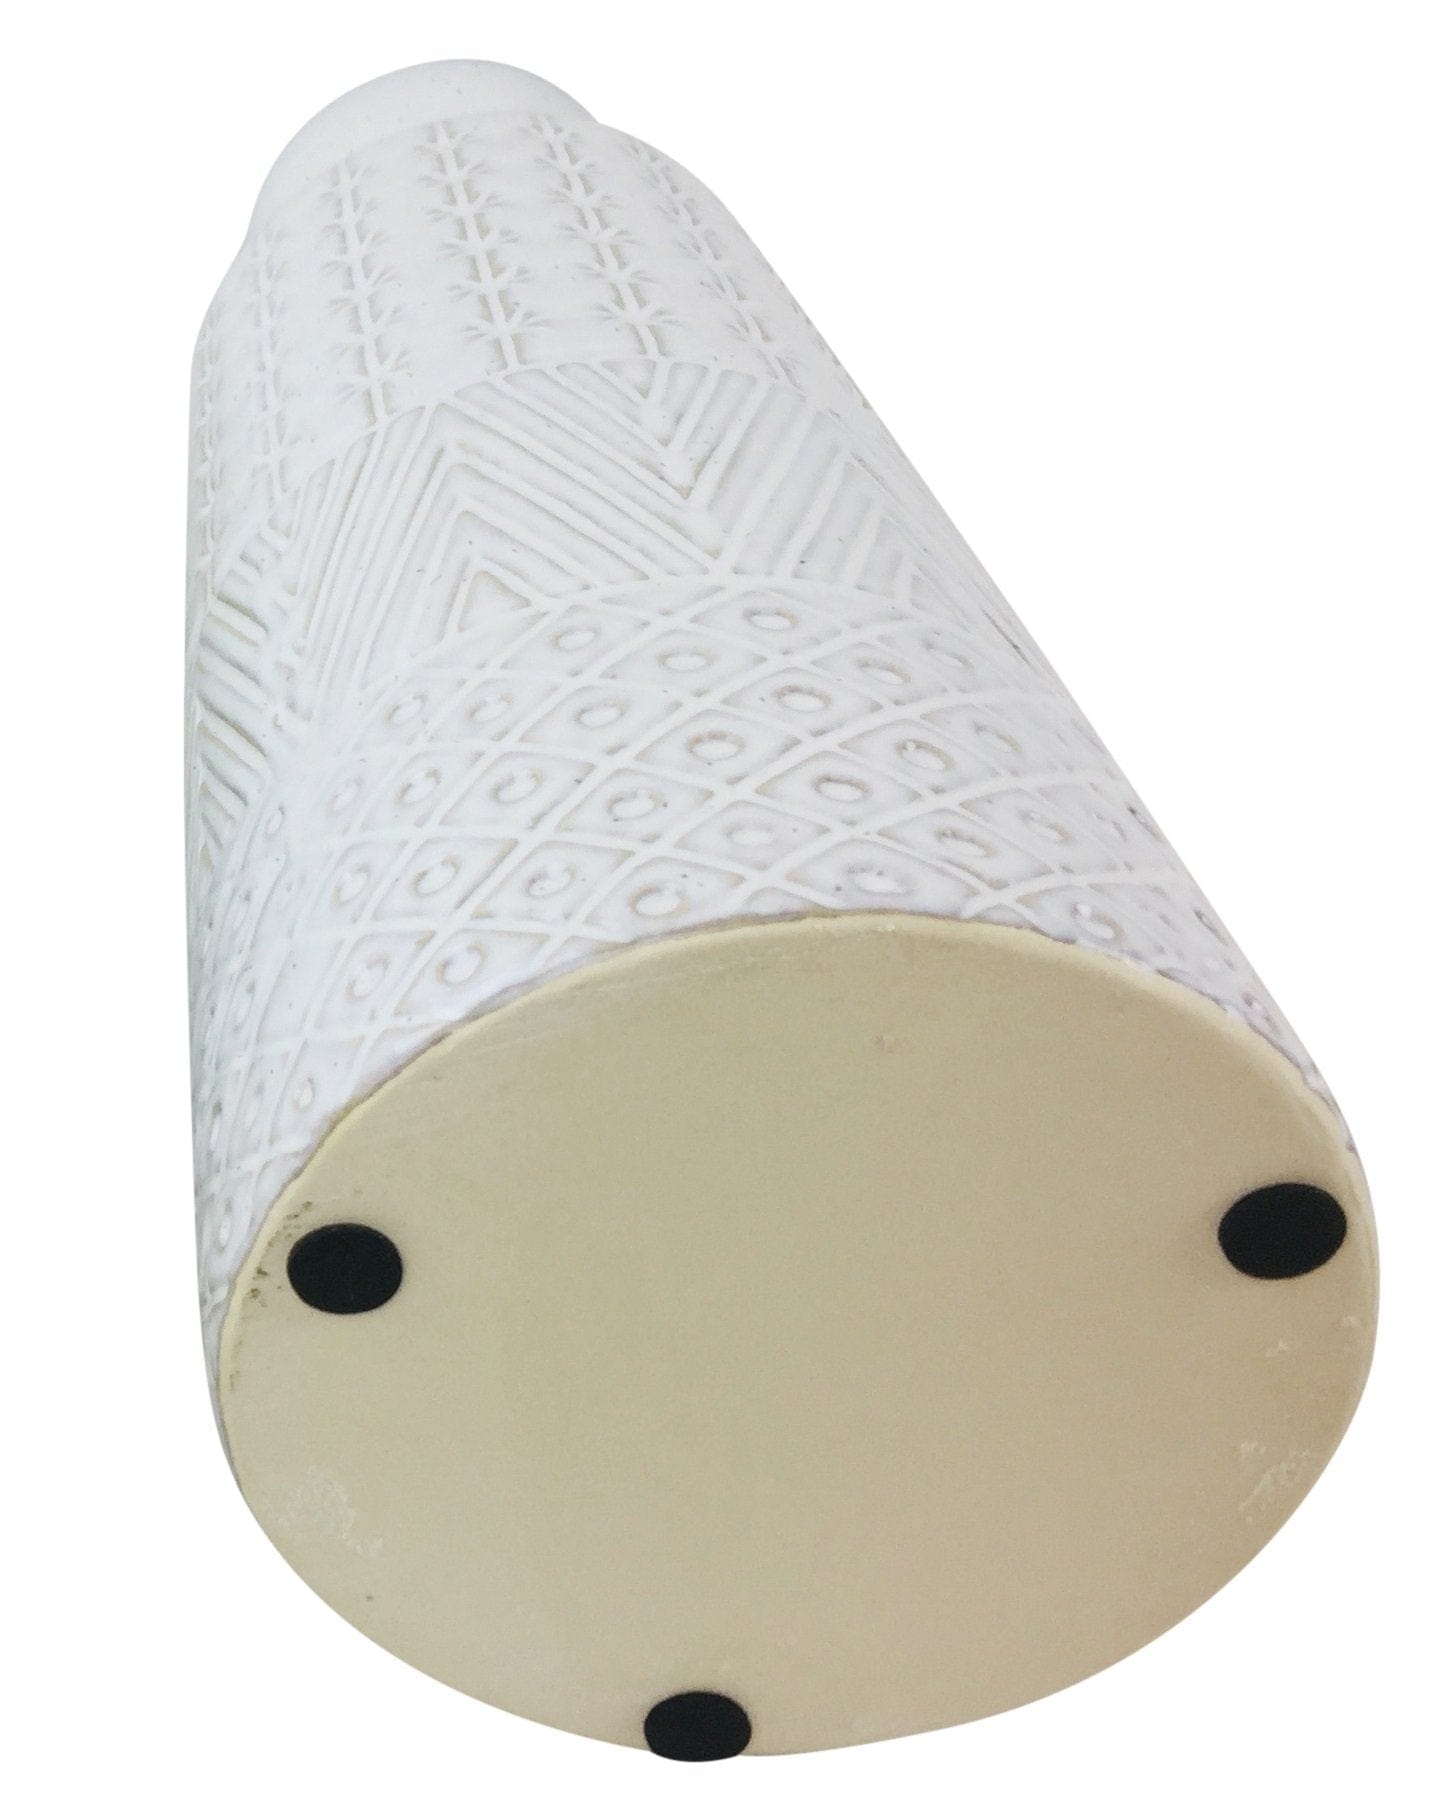 White Star Textured Stoneware Vase 44cm - Kaftan direct